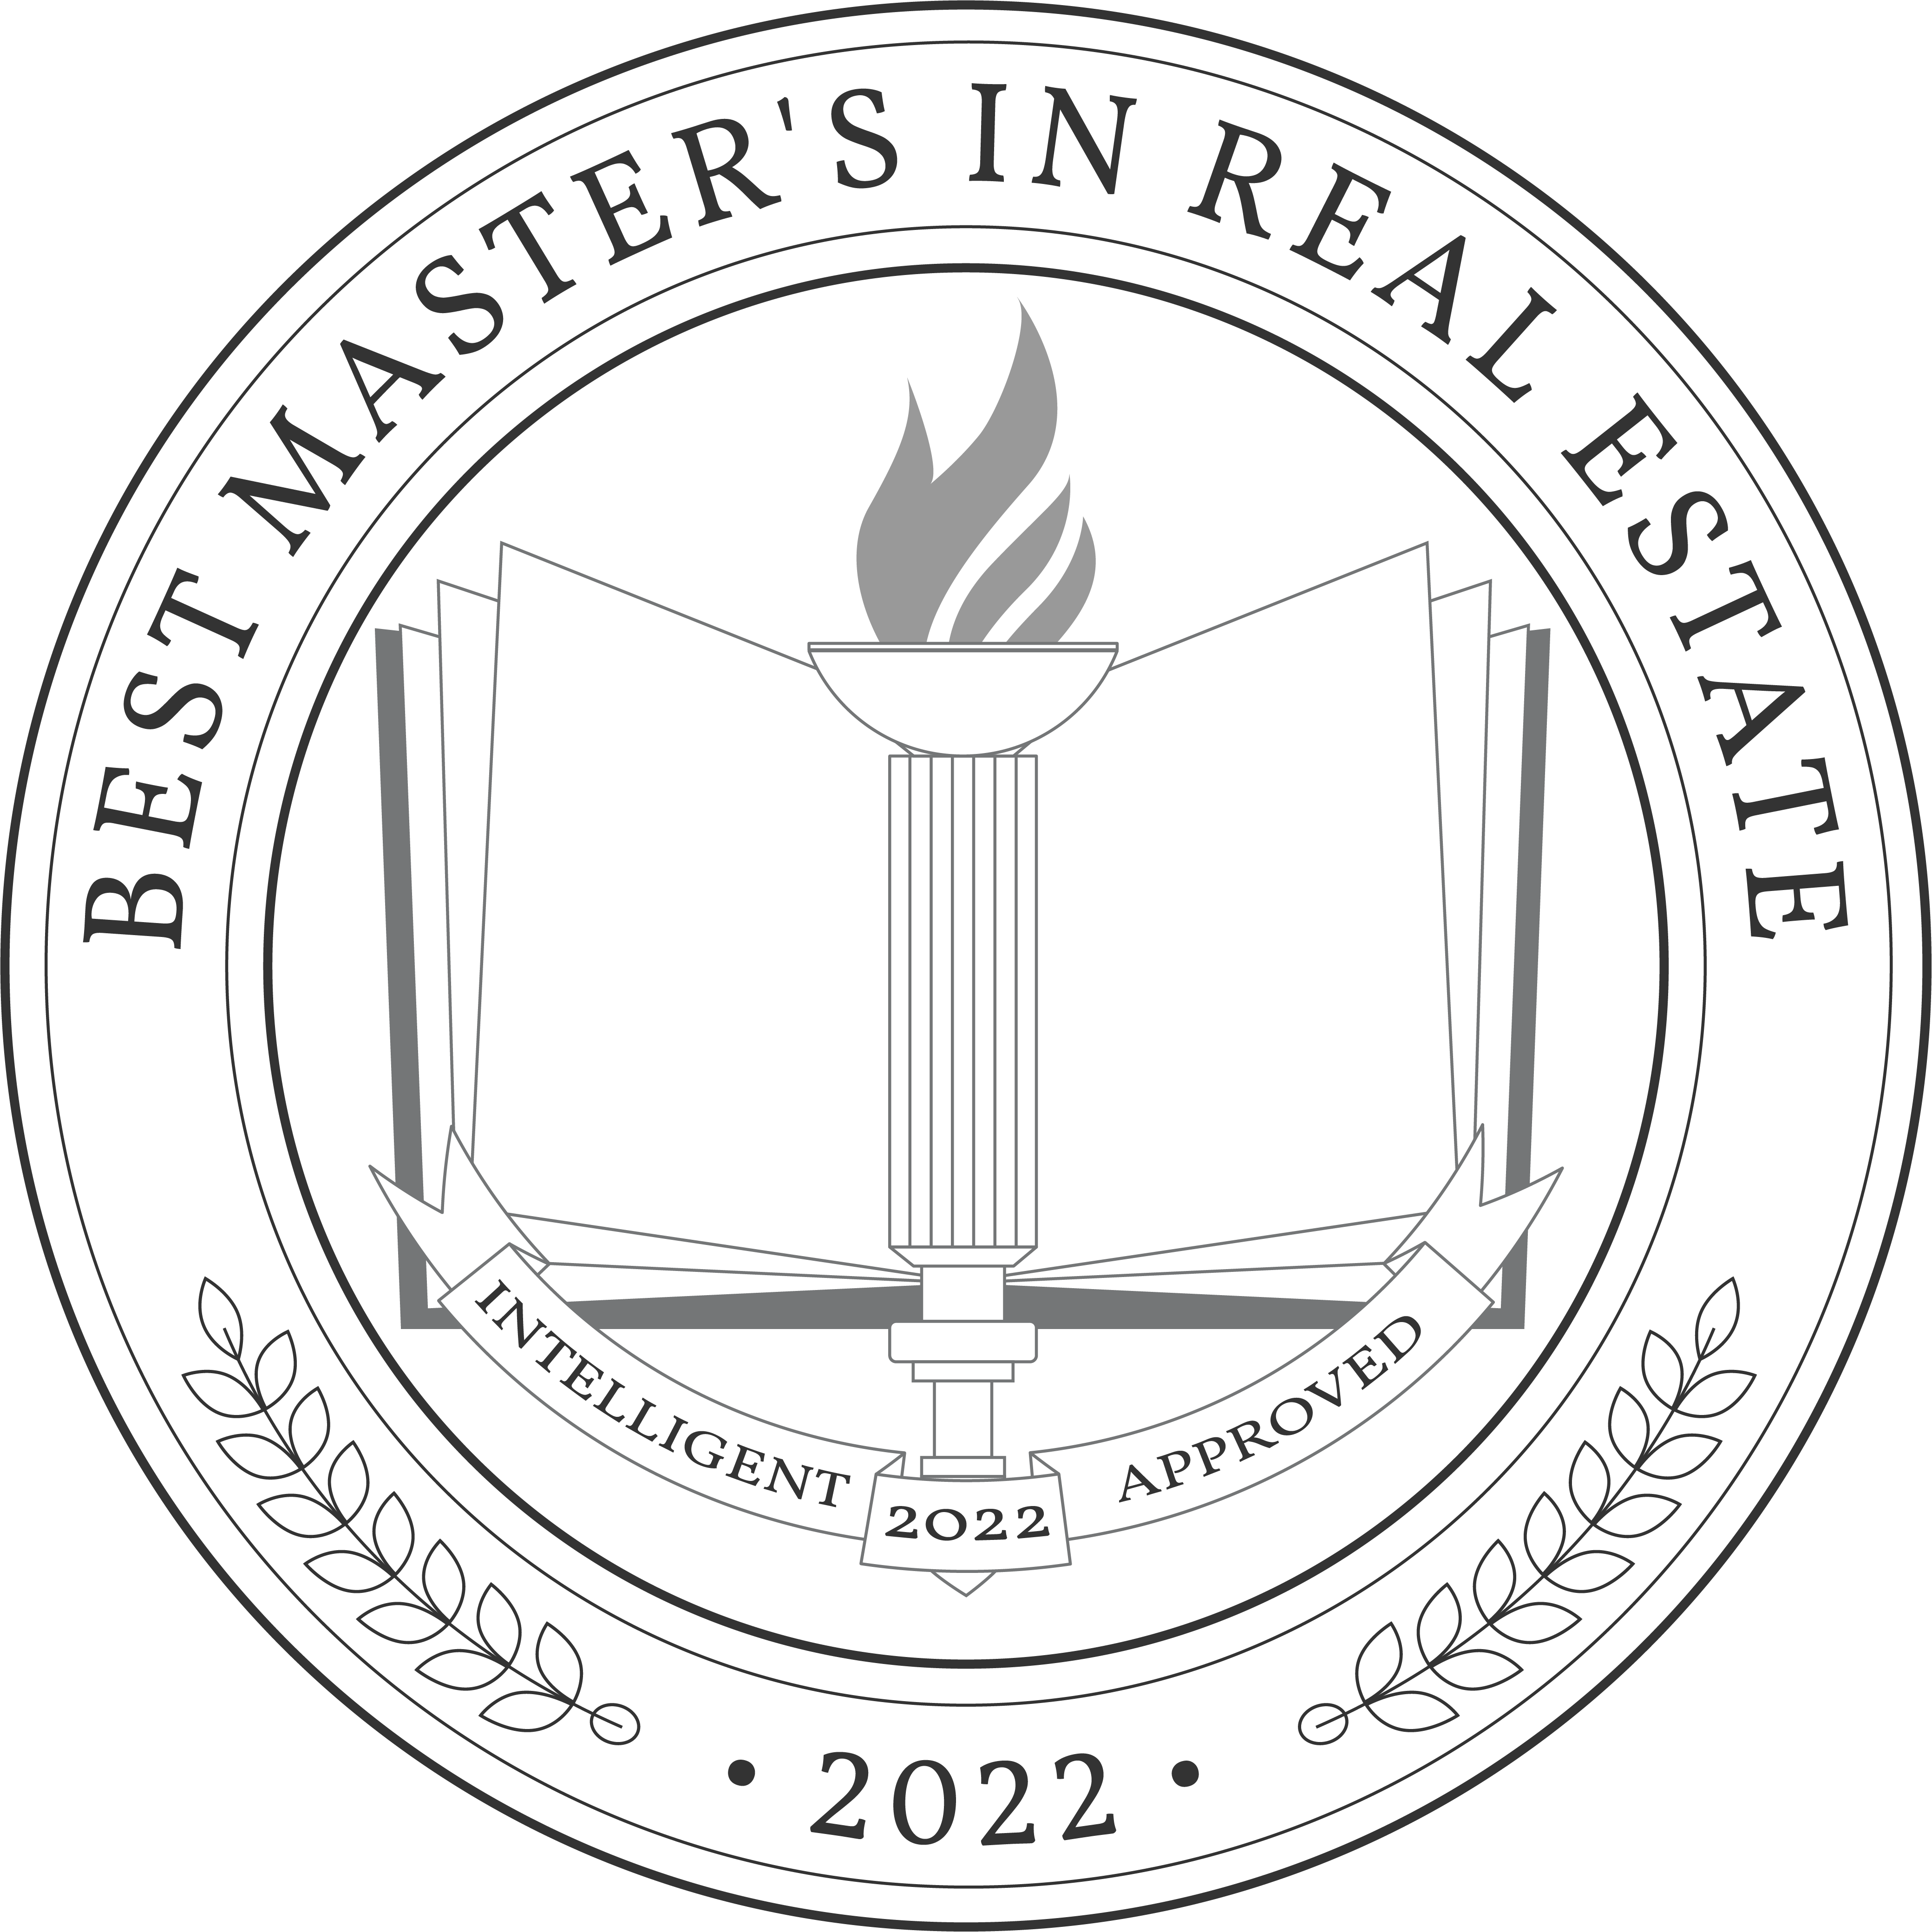 Best Master's in Real Estate Degree Programs